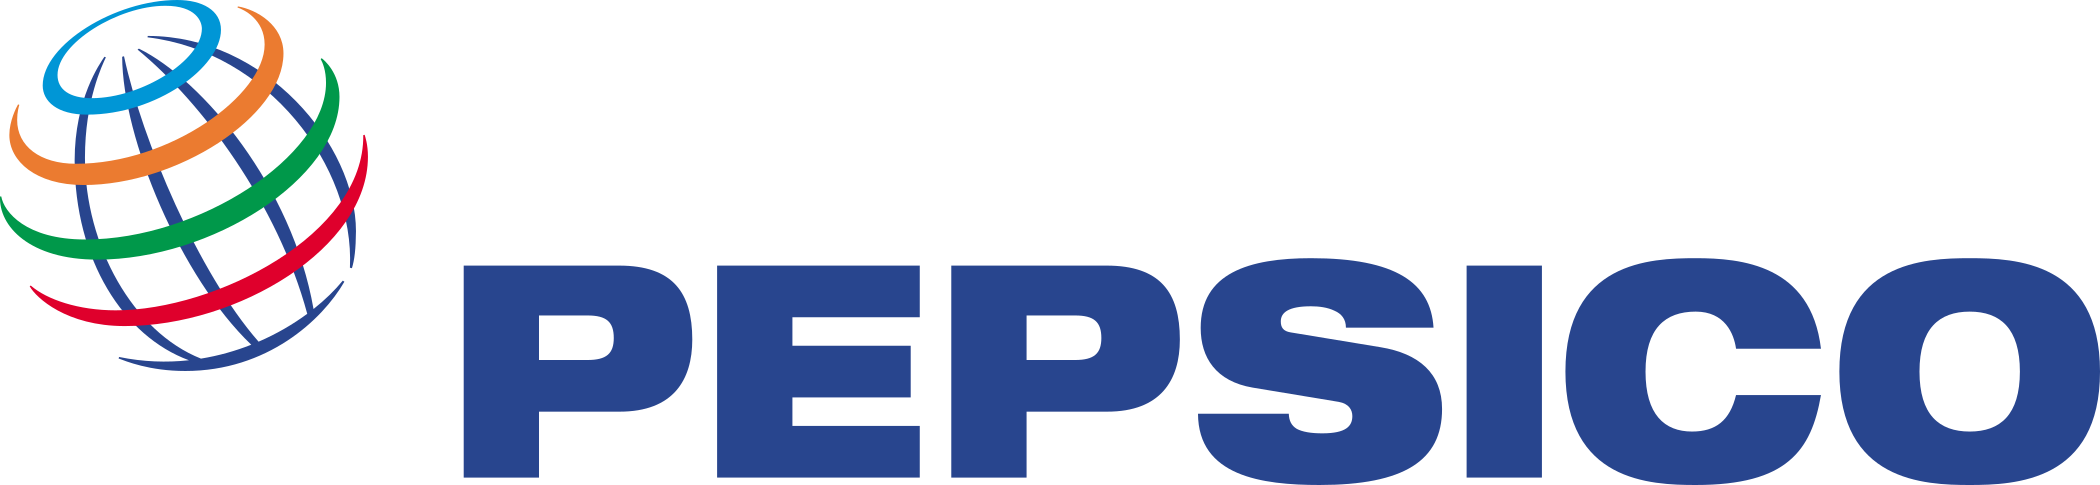 Pepsico logo 1